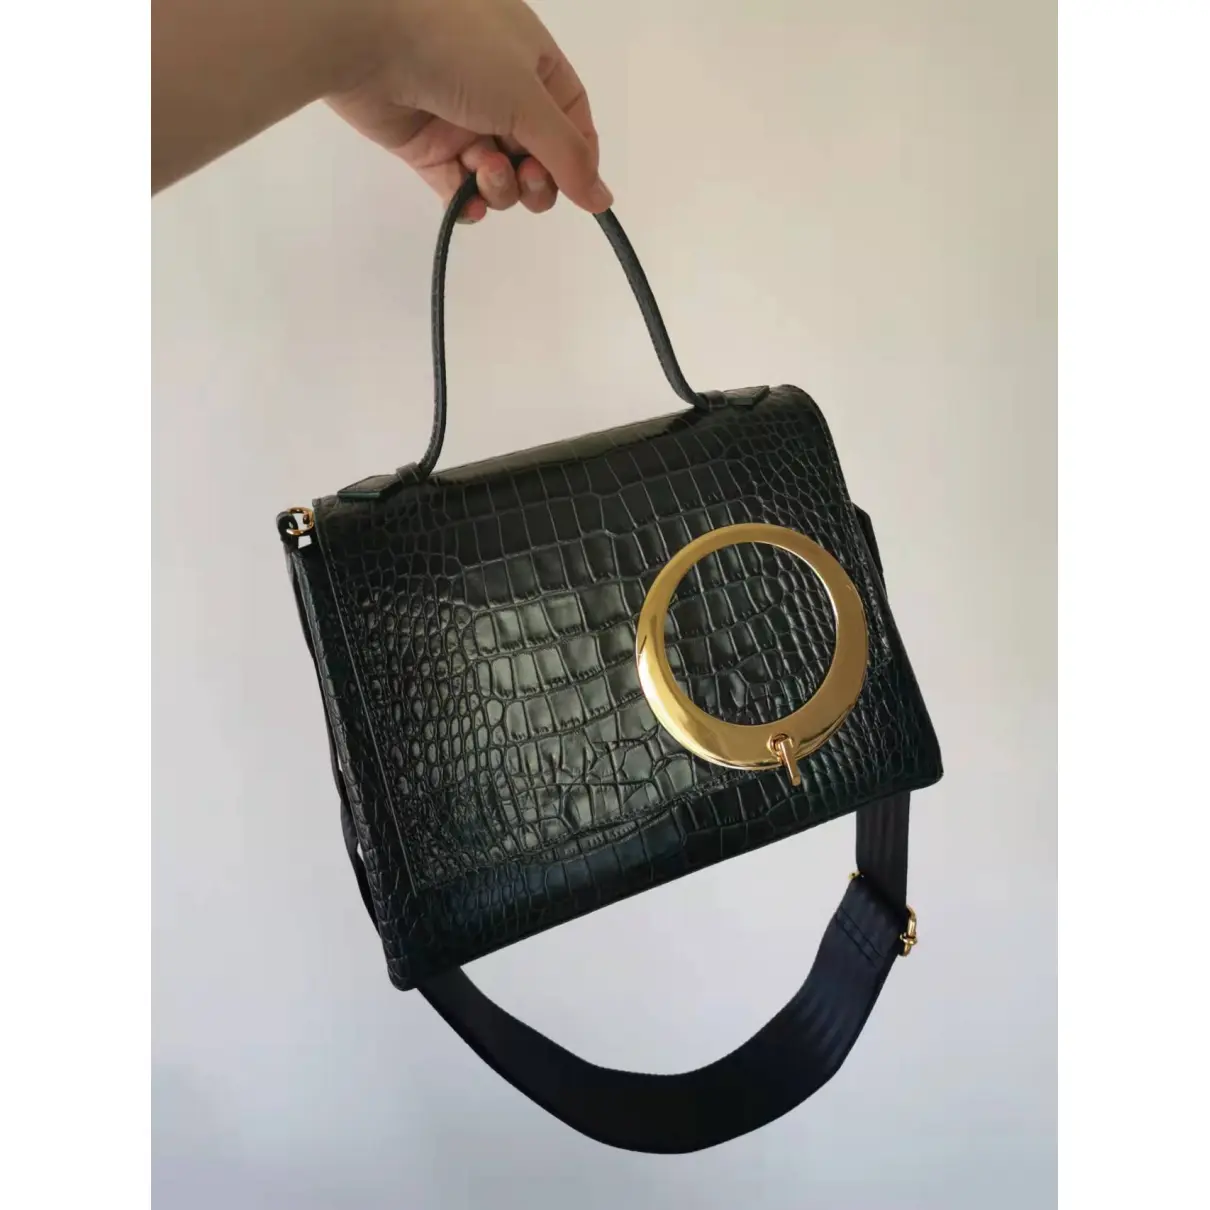 Leather handbag Trademark